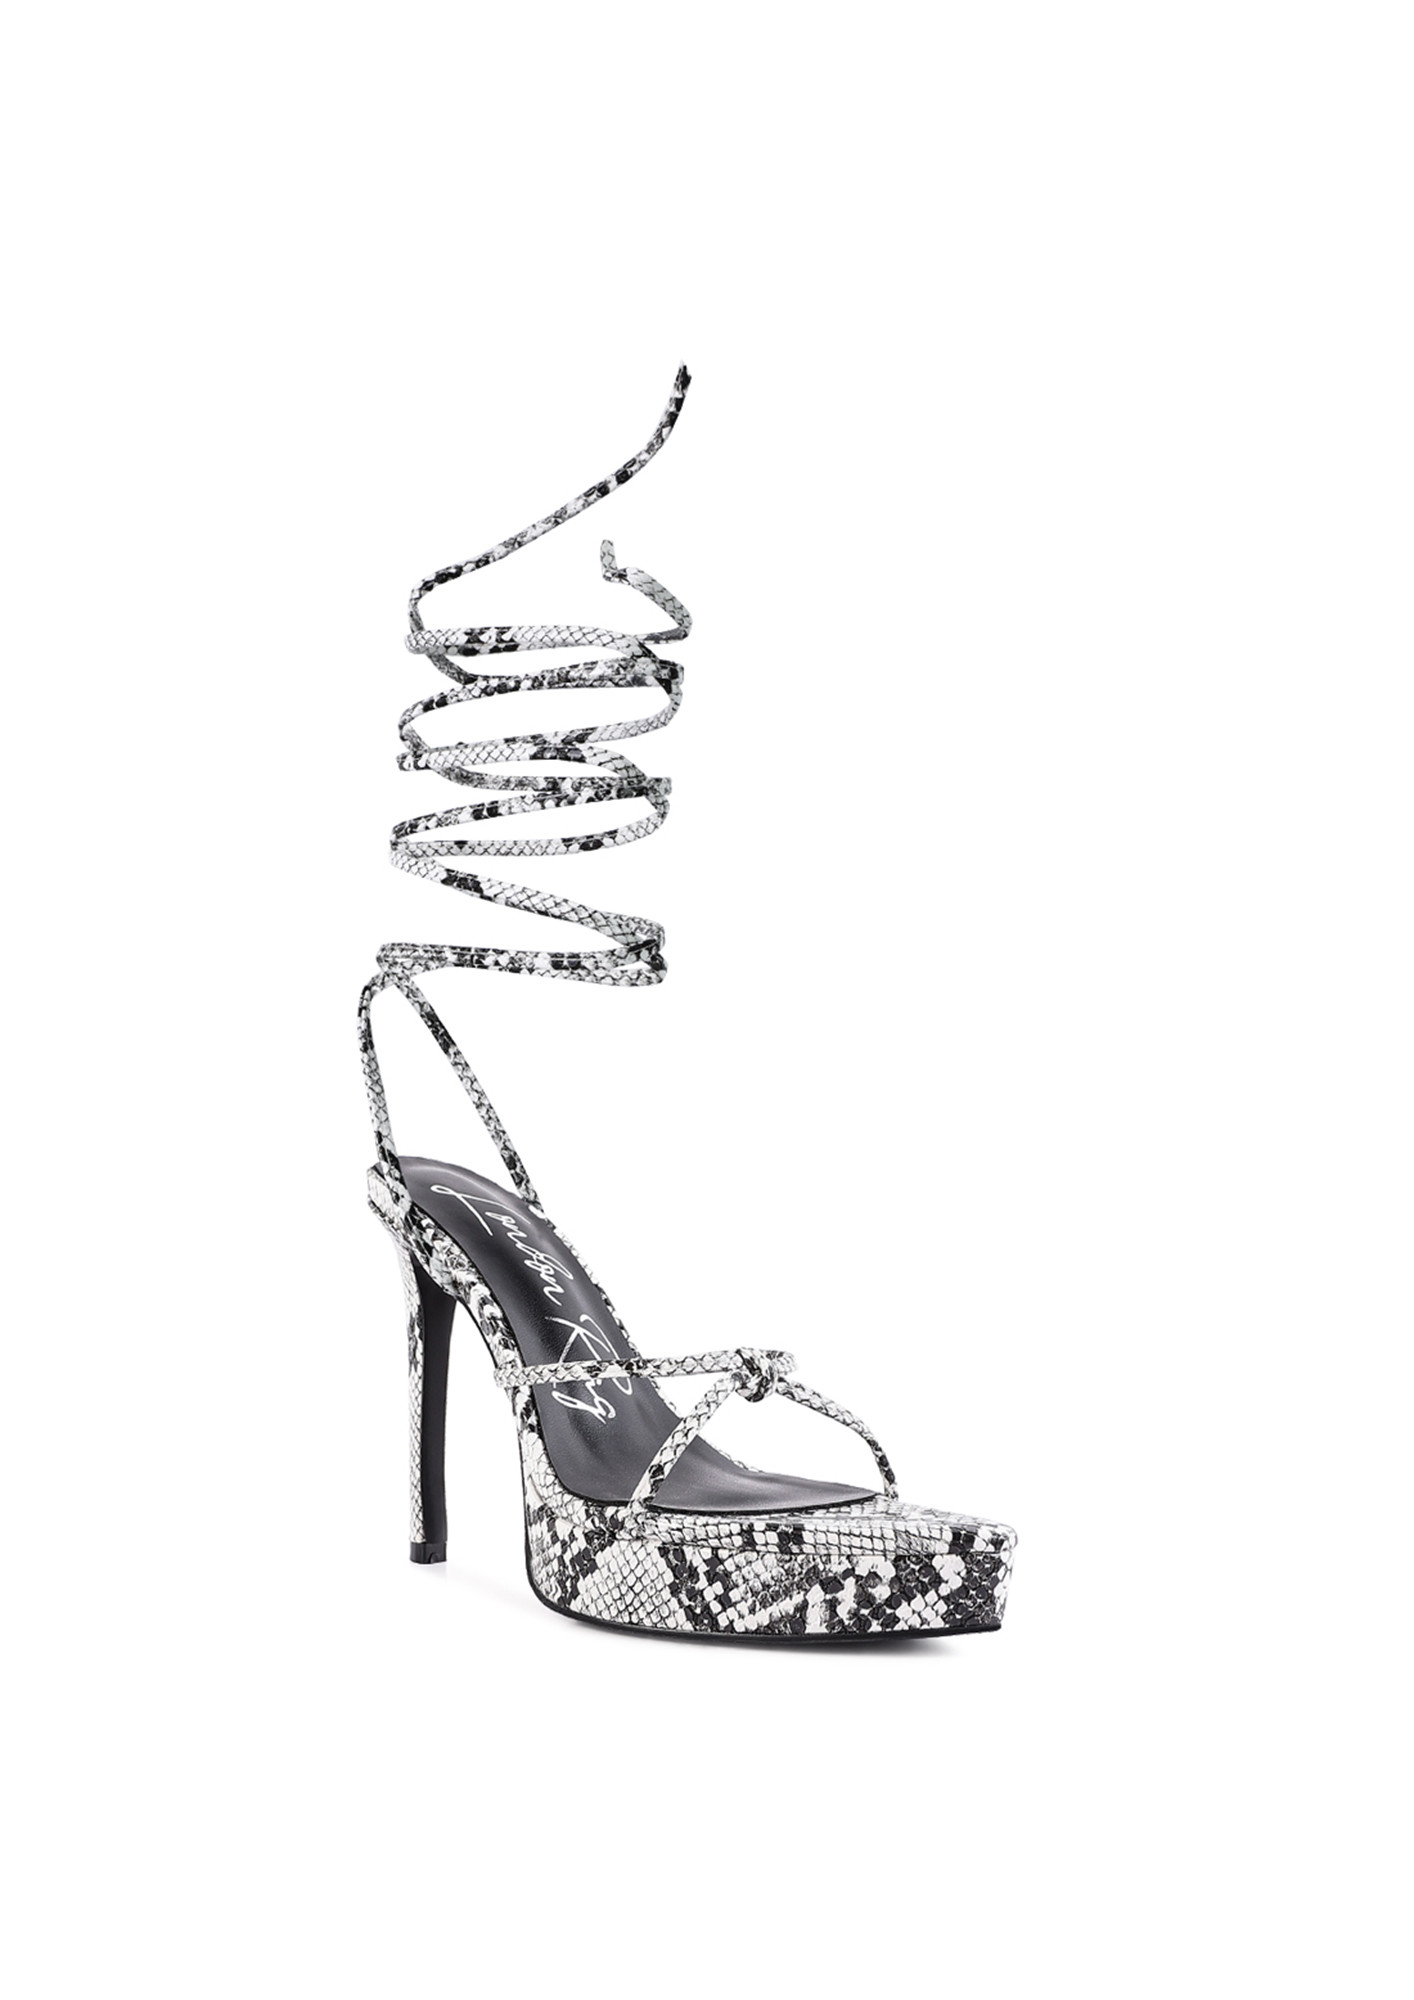 330 Designs ideas  womens sandals flat sandal online online shopping  shoes